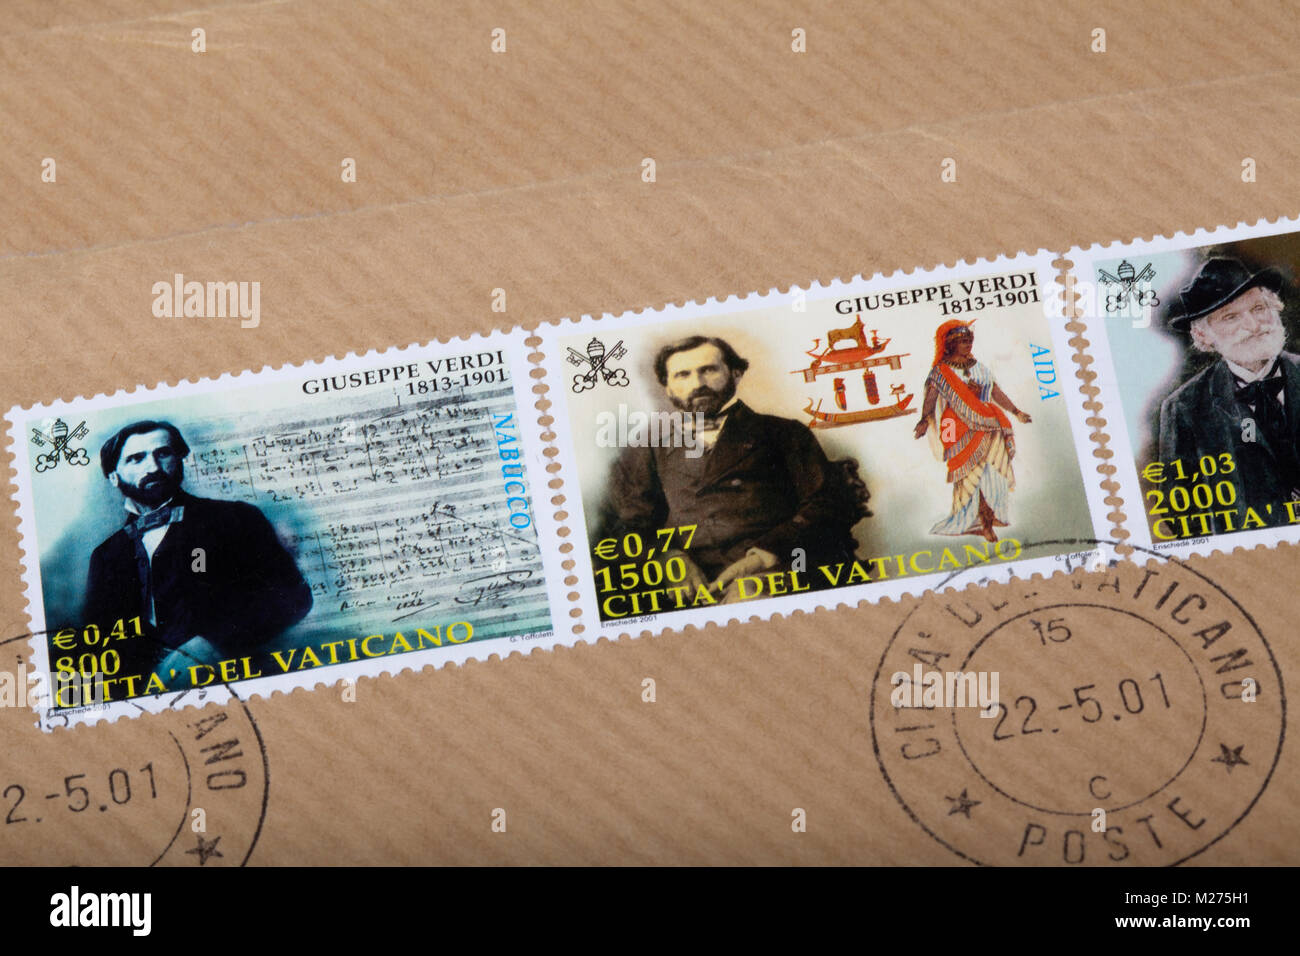 Timbri dal Vaticano in una lettera stampigliata, Vaticano, Italia, Europa, Gestempelte Briefmarken aus dem Vatikan, Giuseppe Verdi Foto Stock